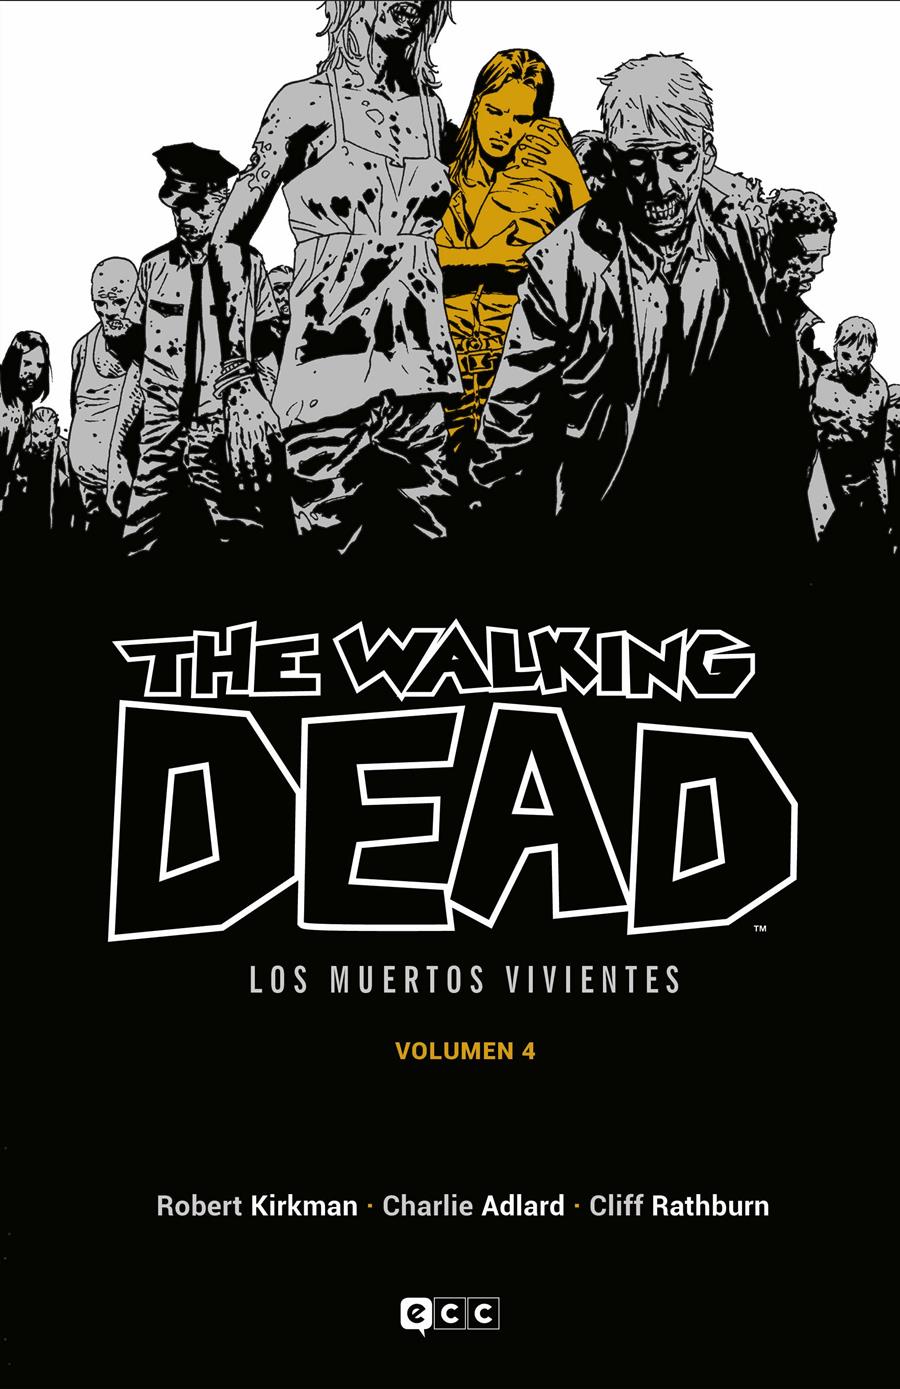 The Walking Dead (Los muertos vivientes) vol. 04 de 16 | N0721-ECC36 | Charlie Adlard / Robert Kirkman | Terra de Còmic - Tu tienda de cómics online especializada en cómics, manga y merchandising